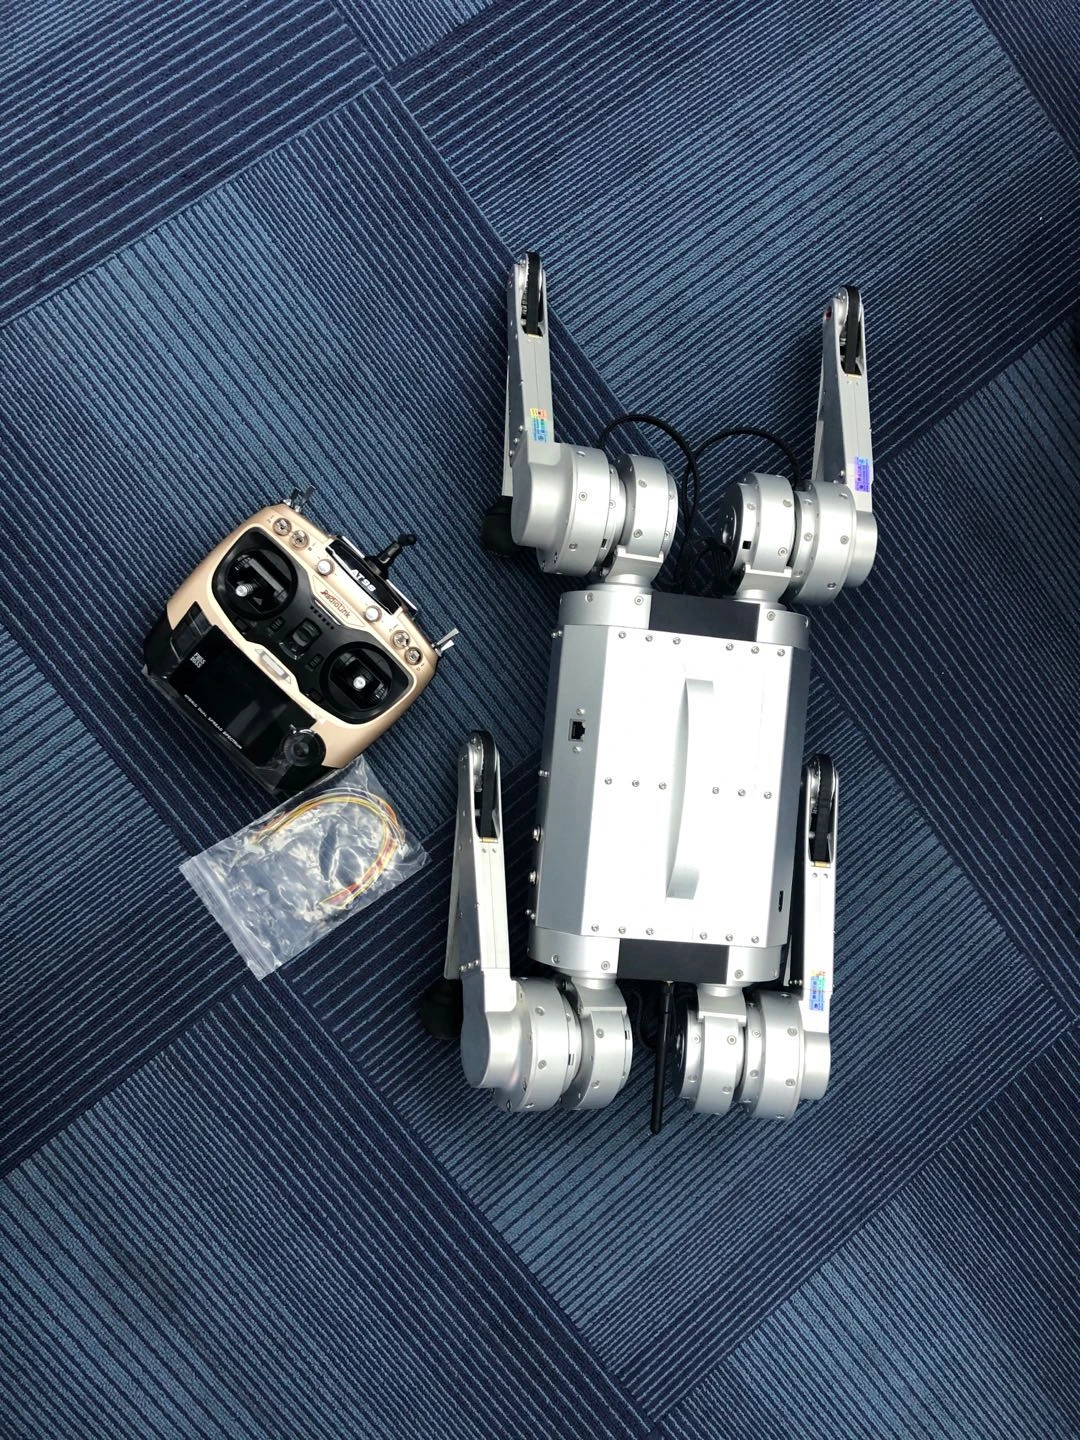 Medium Electric Driven Robot Dog Based On Mit Cheetah Dogotix-019a.